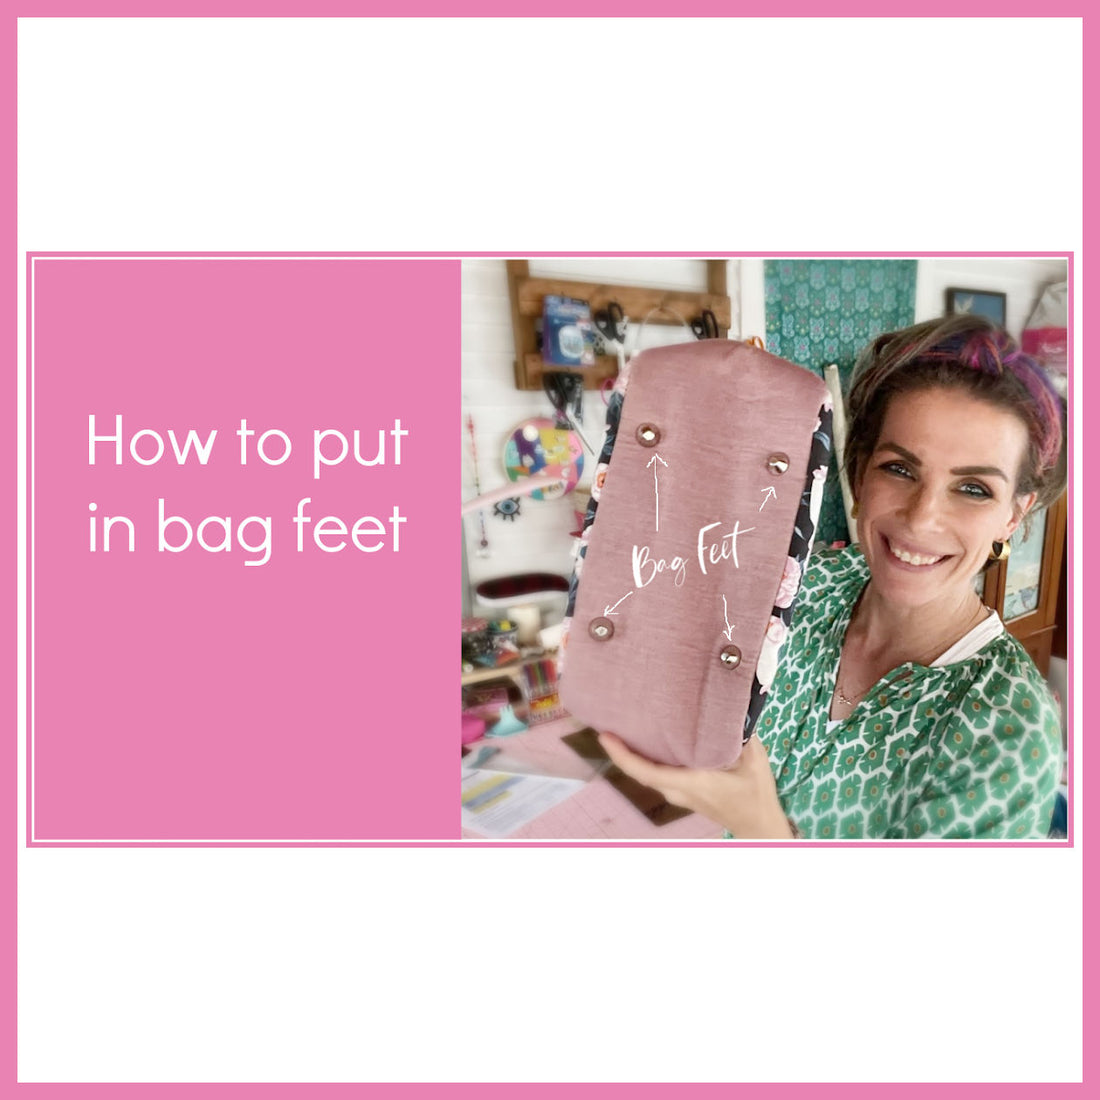 How to apply Bag Feet